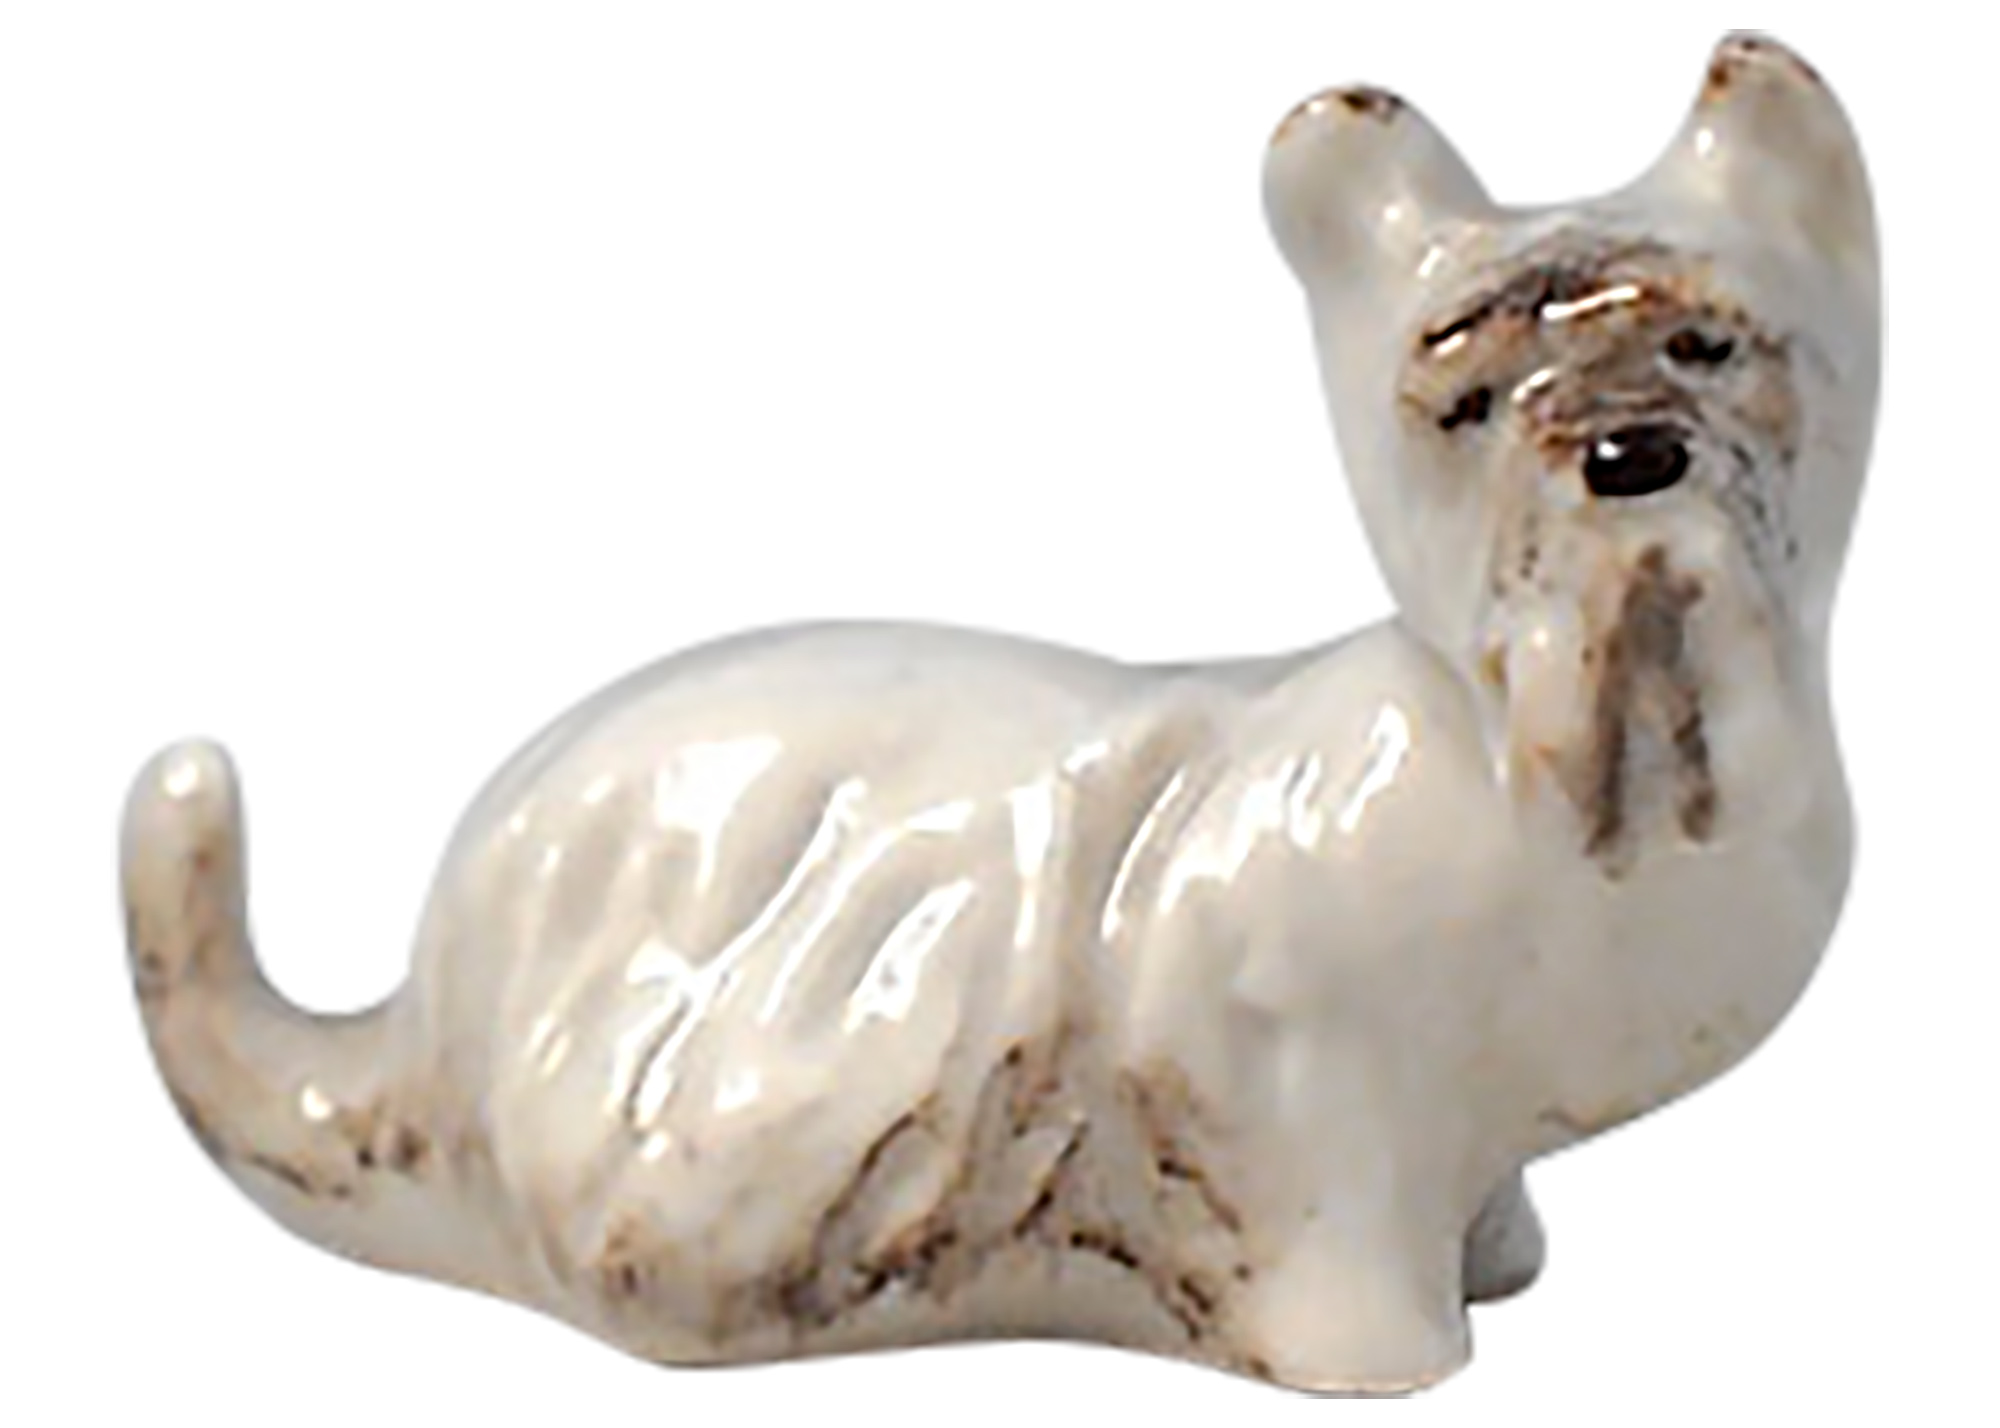 Buy Small Scottish Terrier Figurine at GoldenCockerel.com